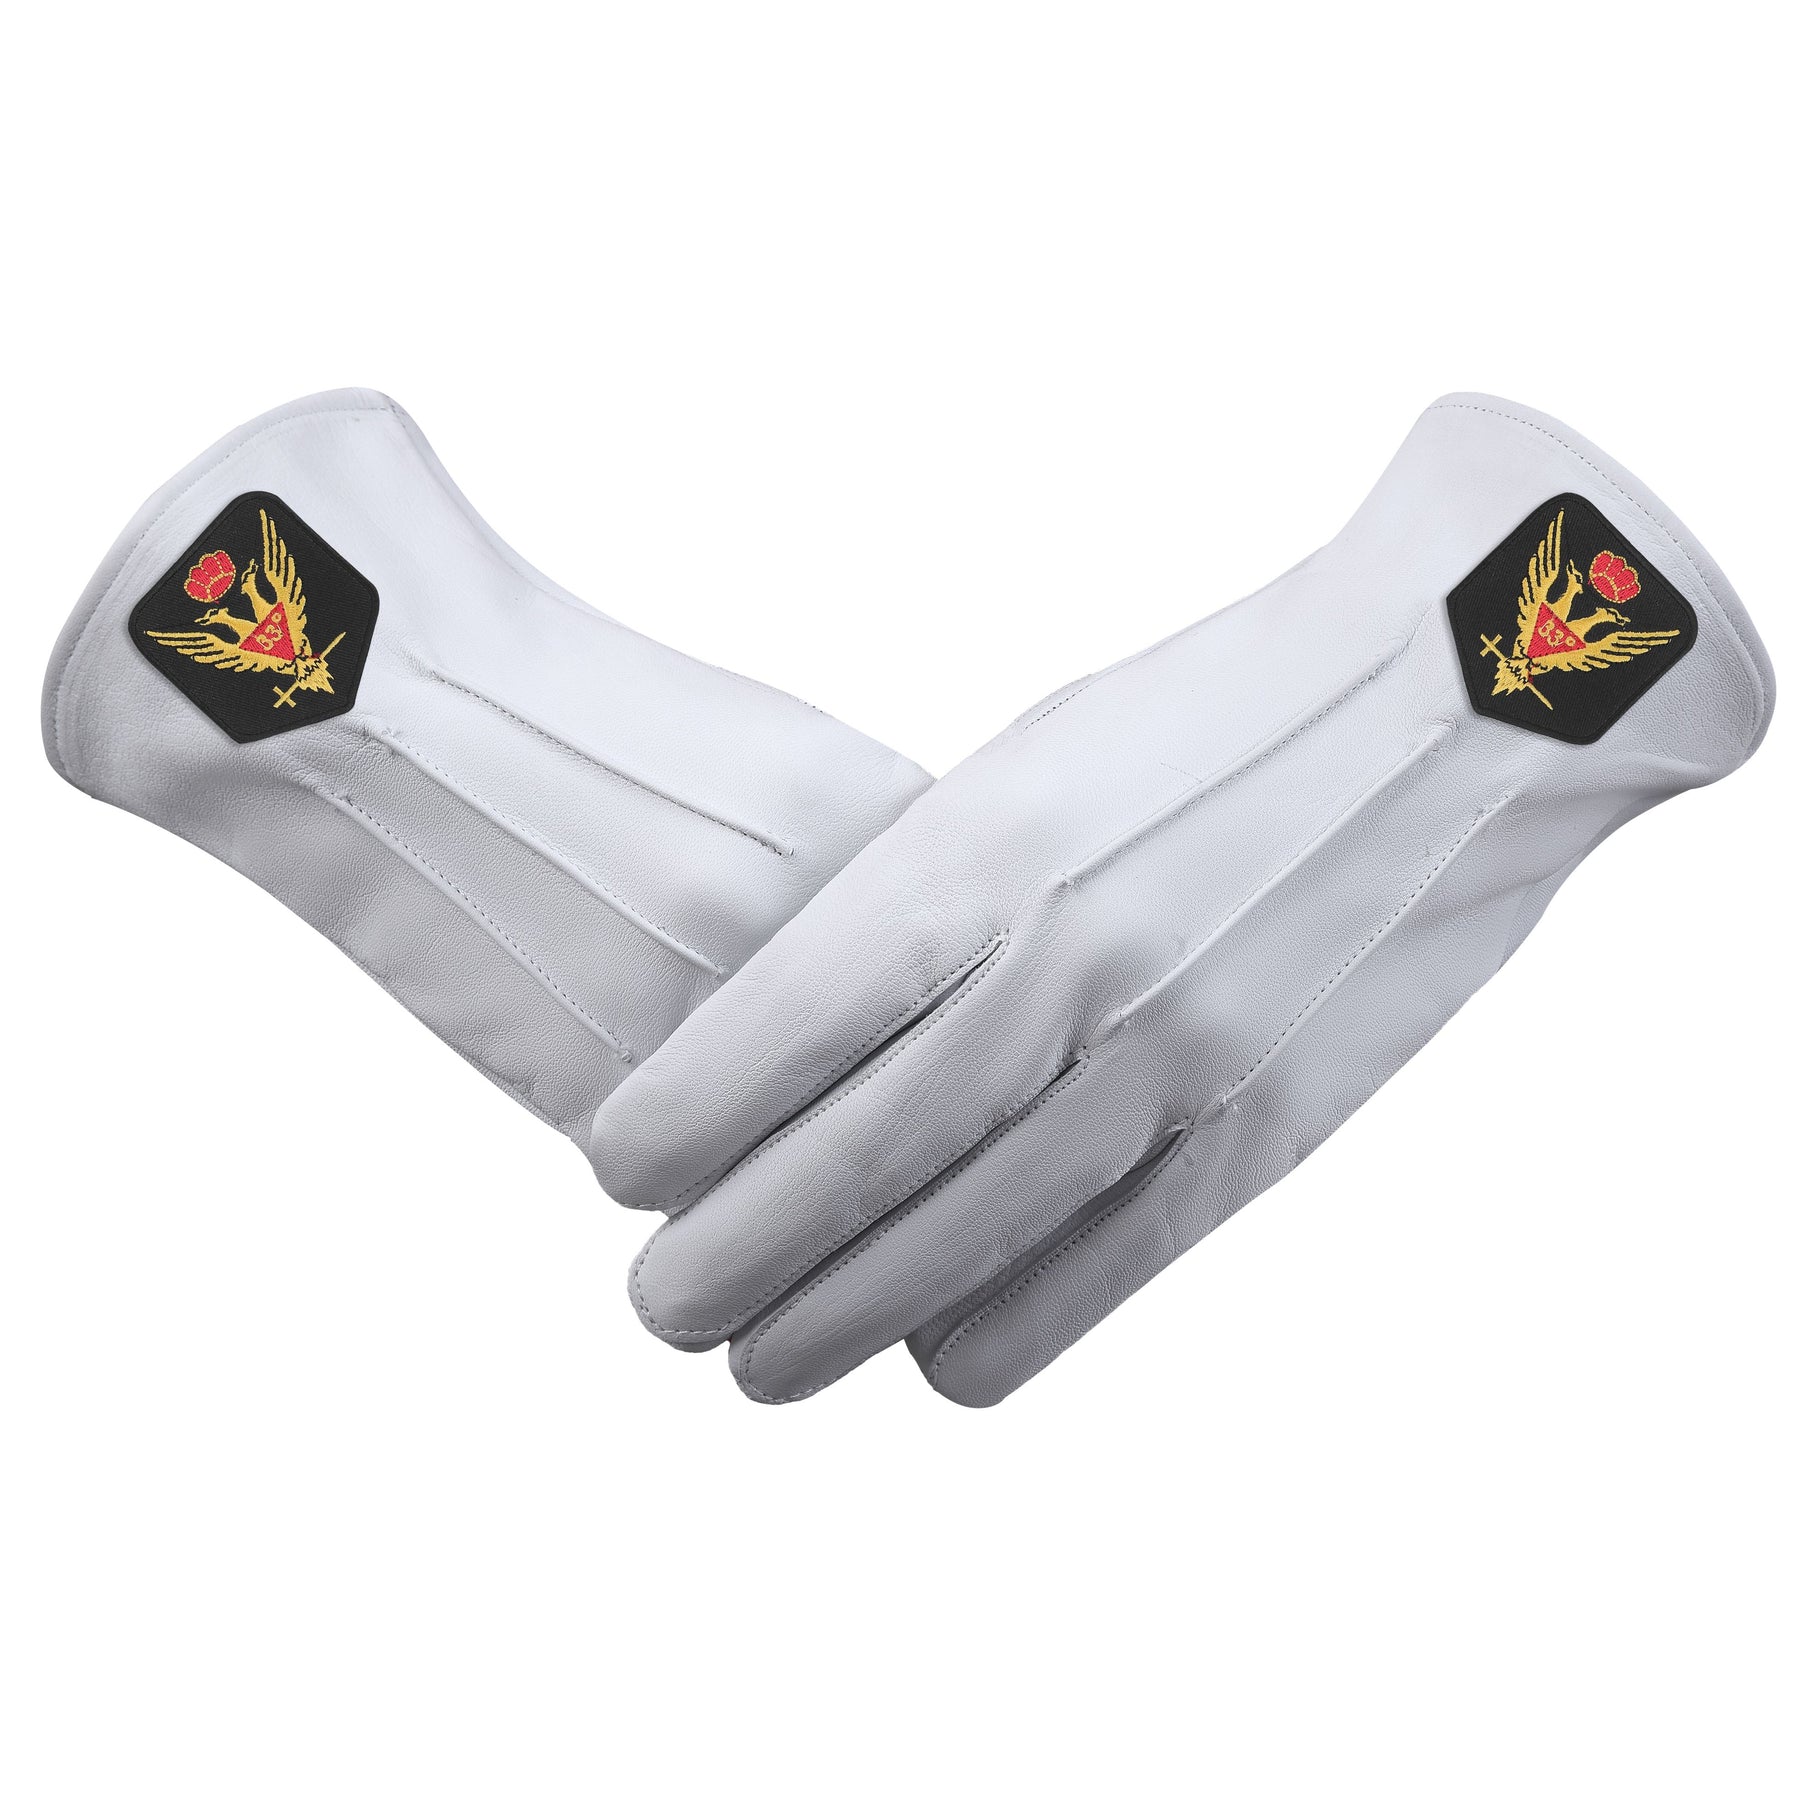 33rd Degree Scottish Rite Glove - White Leather With Gold Emblem - Bricks Masons